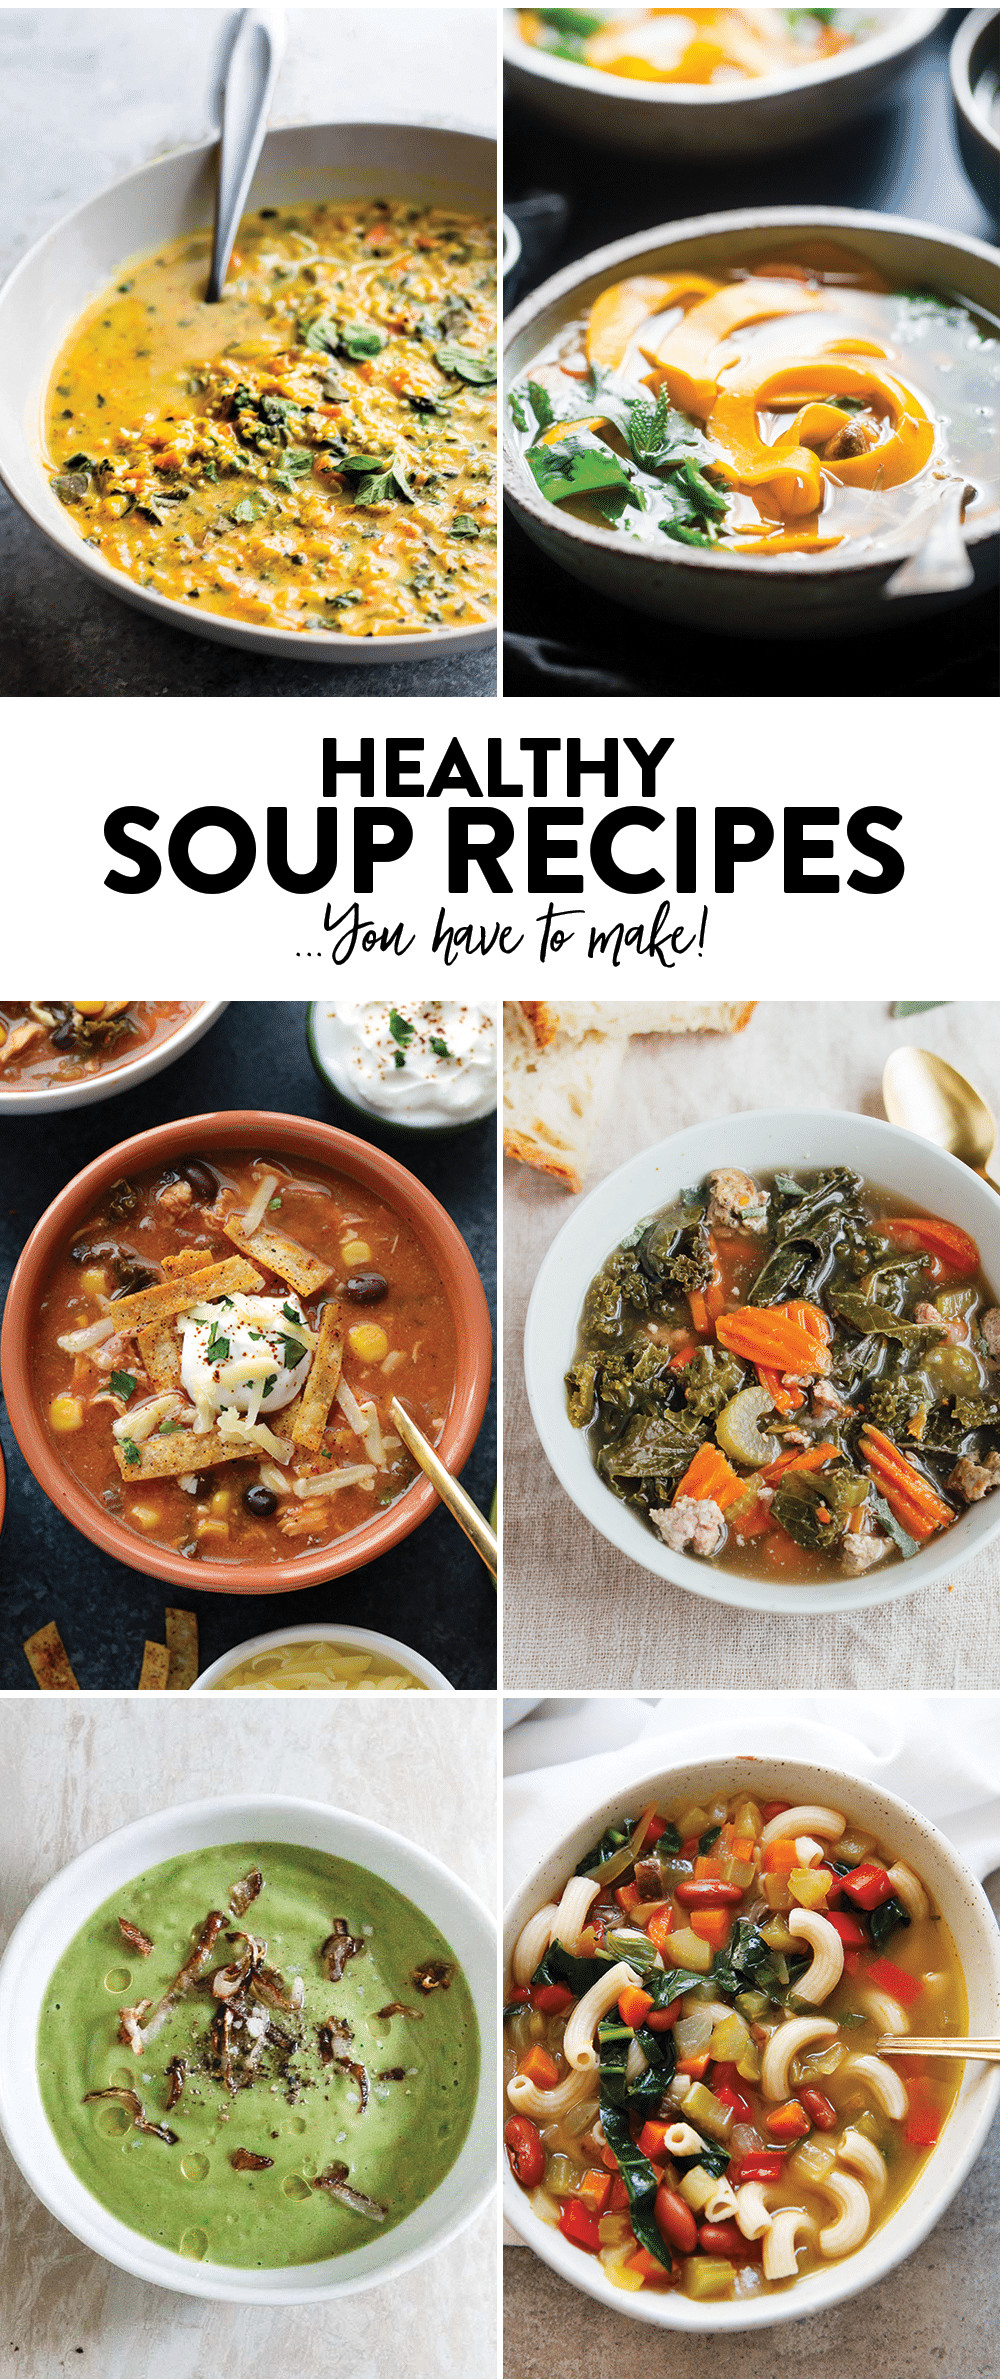 Healthy Soups To Make
 Curried Cauliflower Rice Kale Soup Paleo Vegan